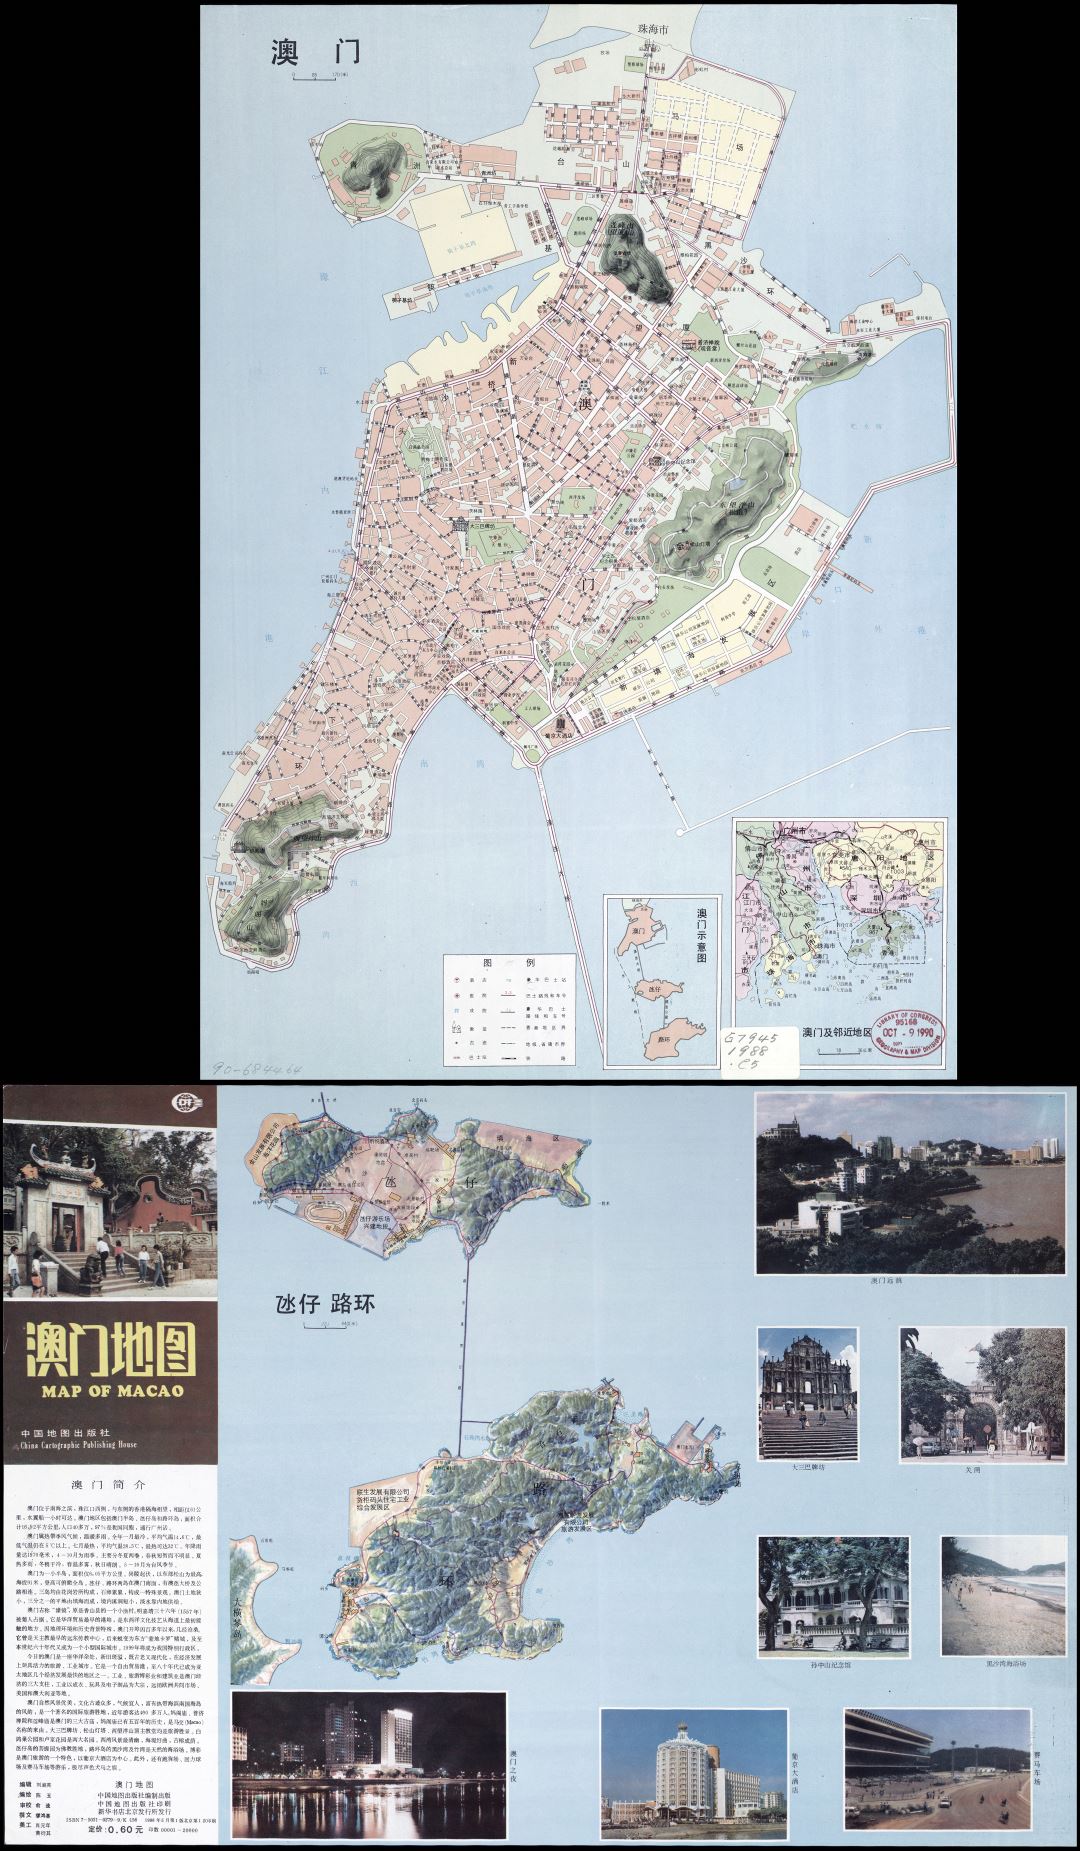 A gran escala detallado mapa turístico de Macao en chino - 1988